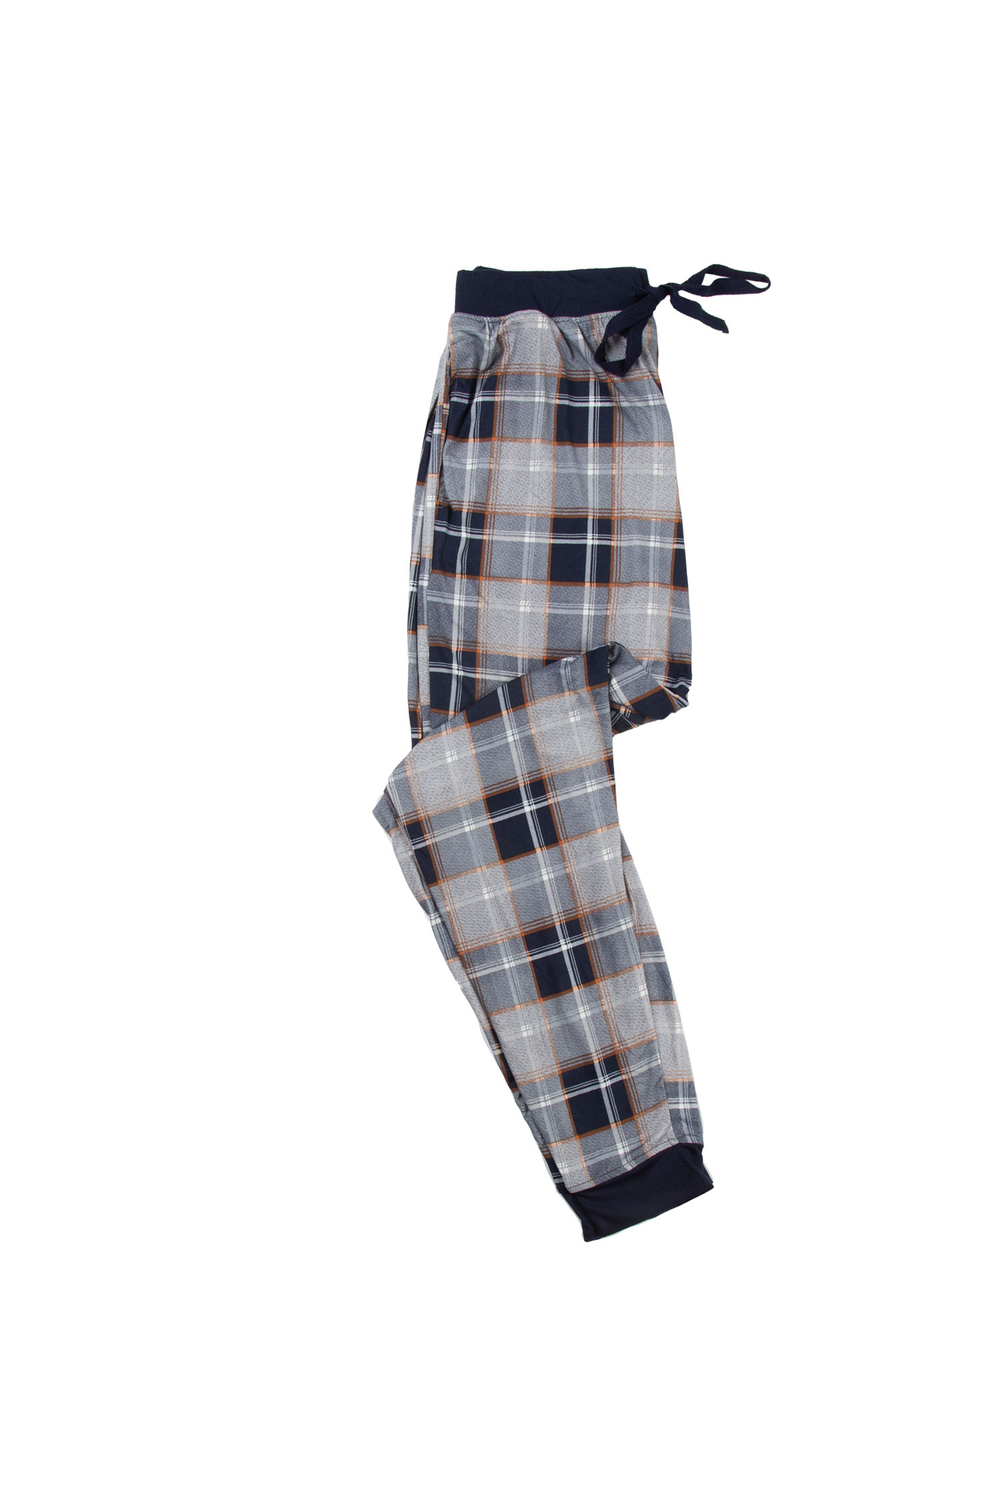 Stretch knit jogger style pajama pants - Blue plaid